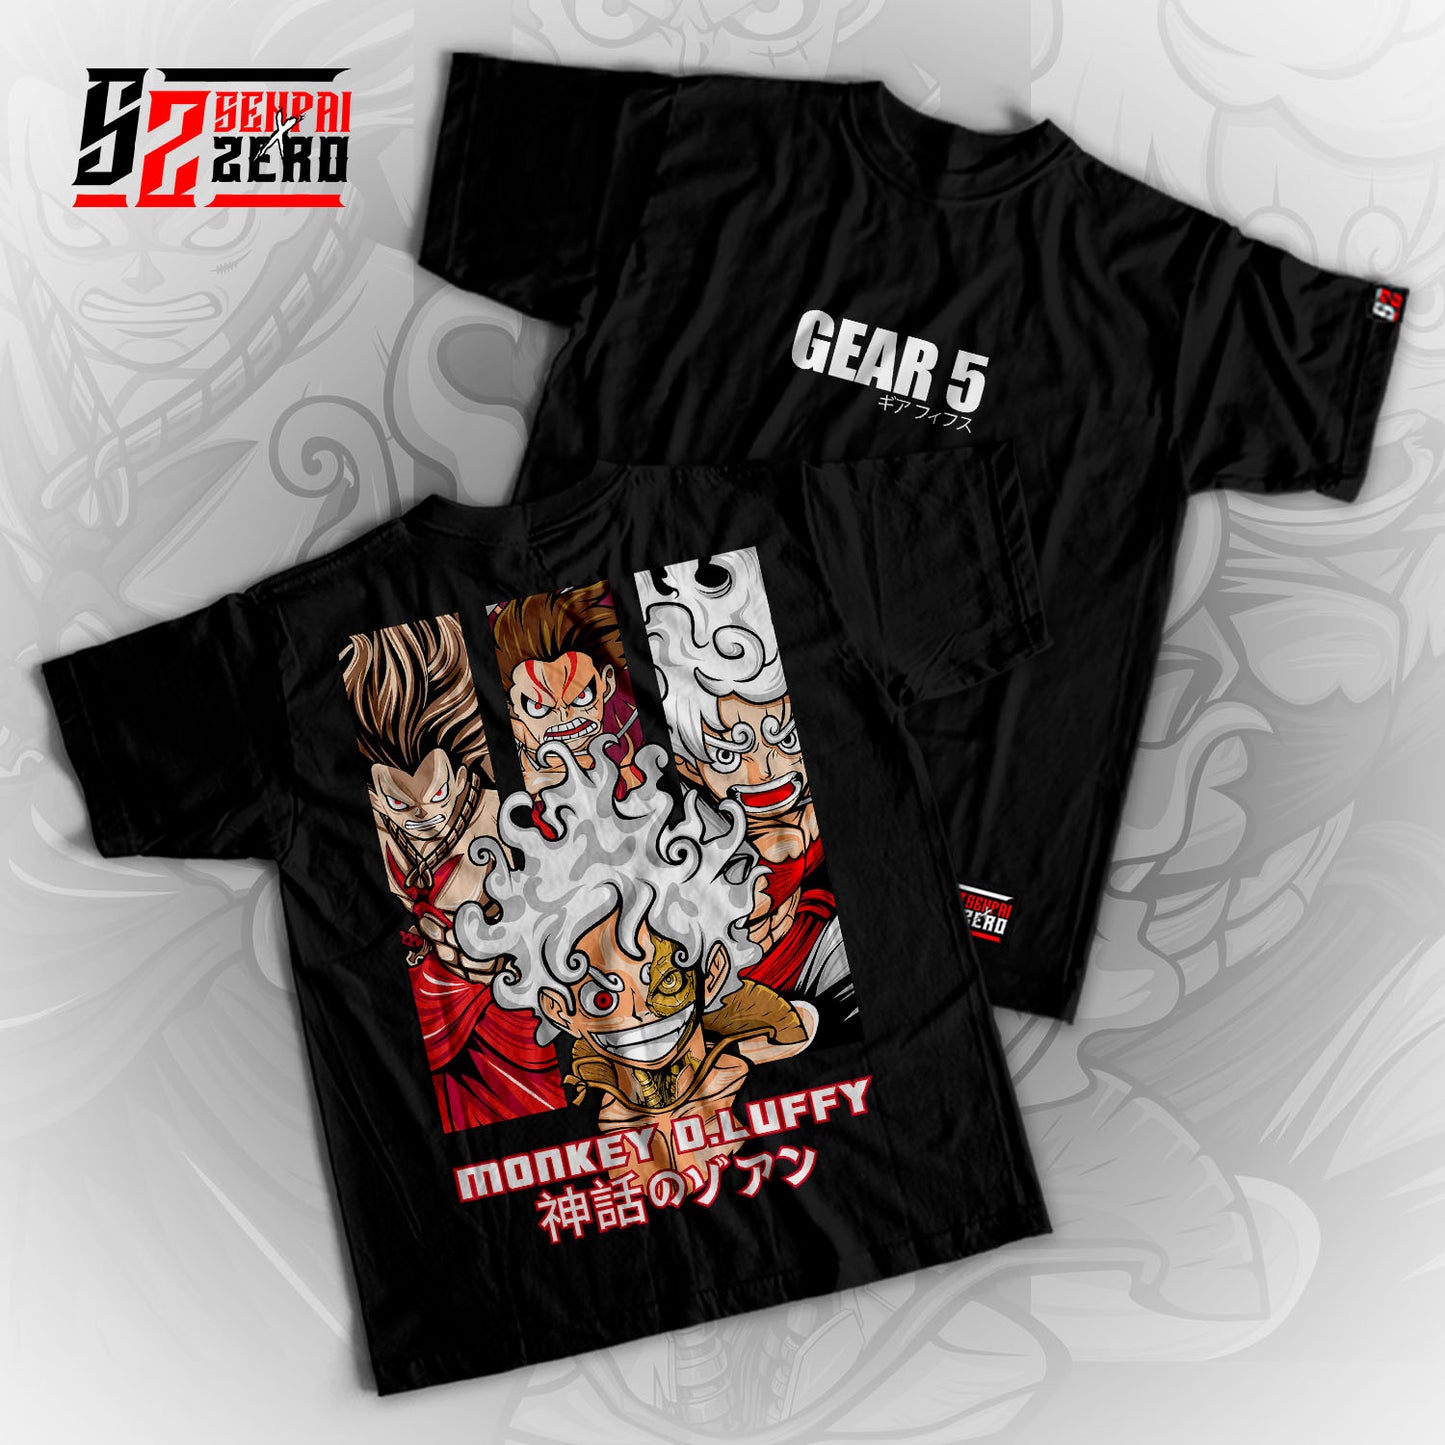 Luffy Gear 5 Anime Shirt by Macoroo - Issuu